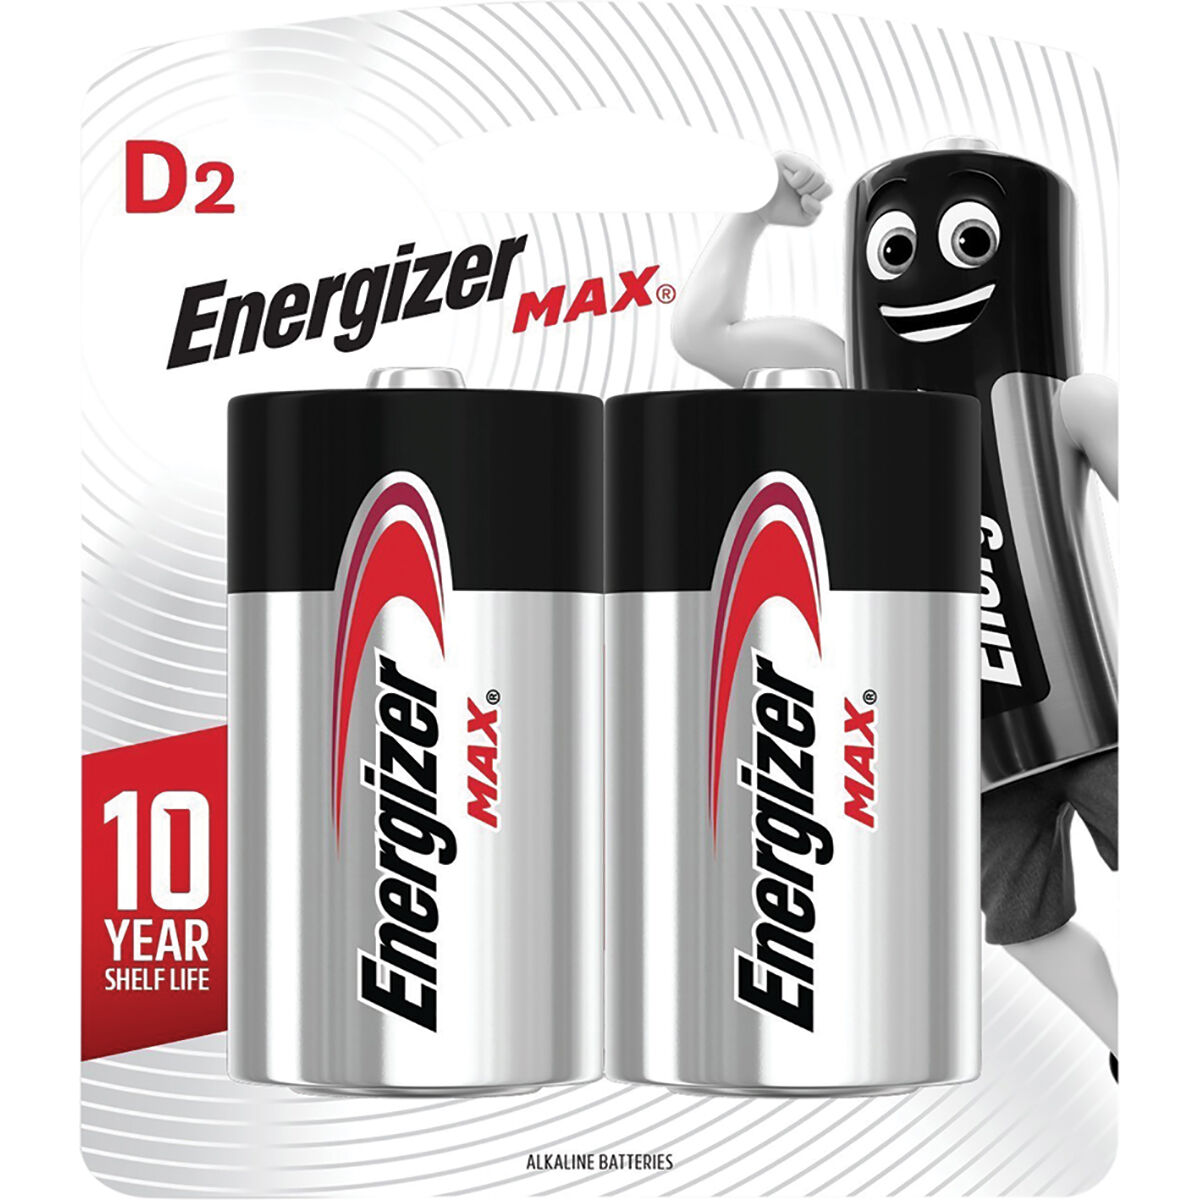 Energizer Max D Batteries - 2 Pack 2 Pack 2 Pack, , scaau_hi-res